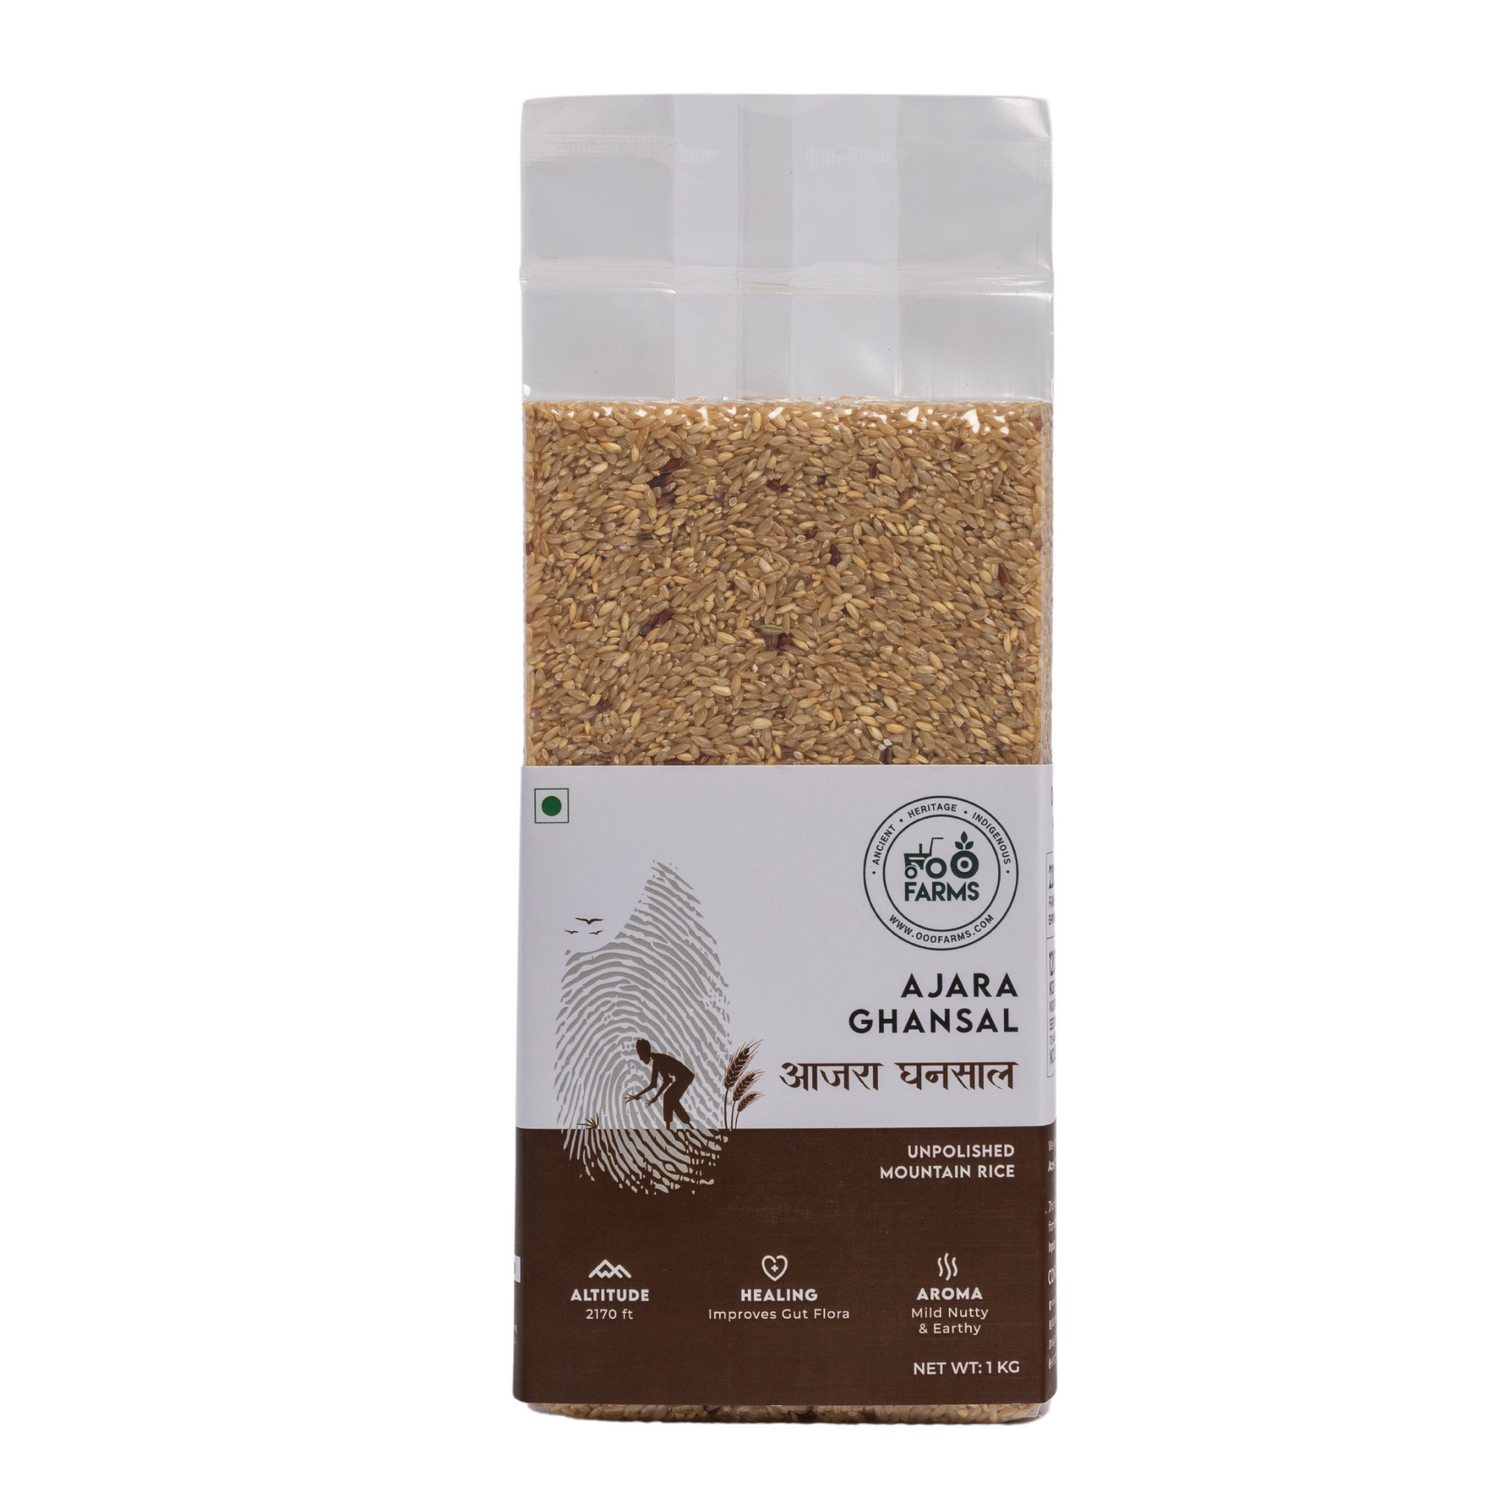 OOO Farms Ajara Ghansal Rice (Unpolished) Package Frontside